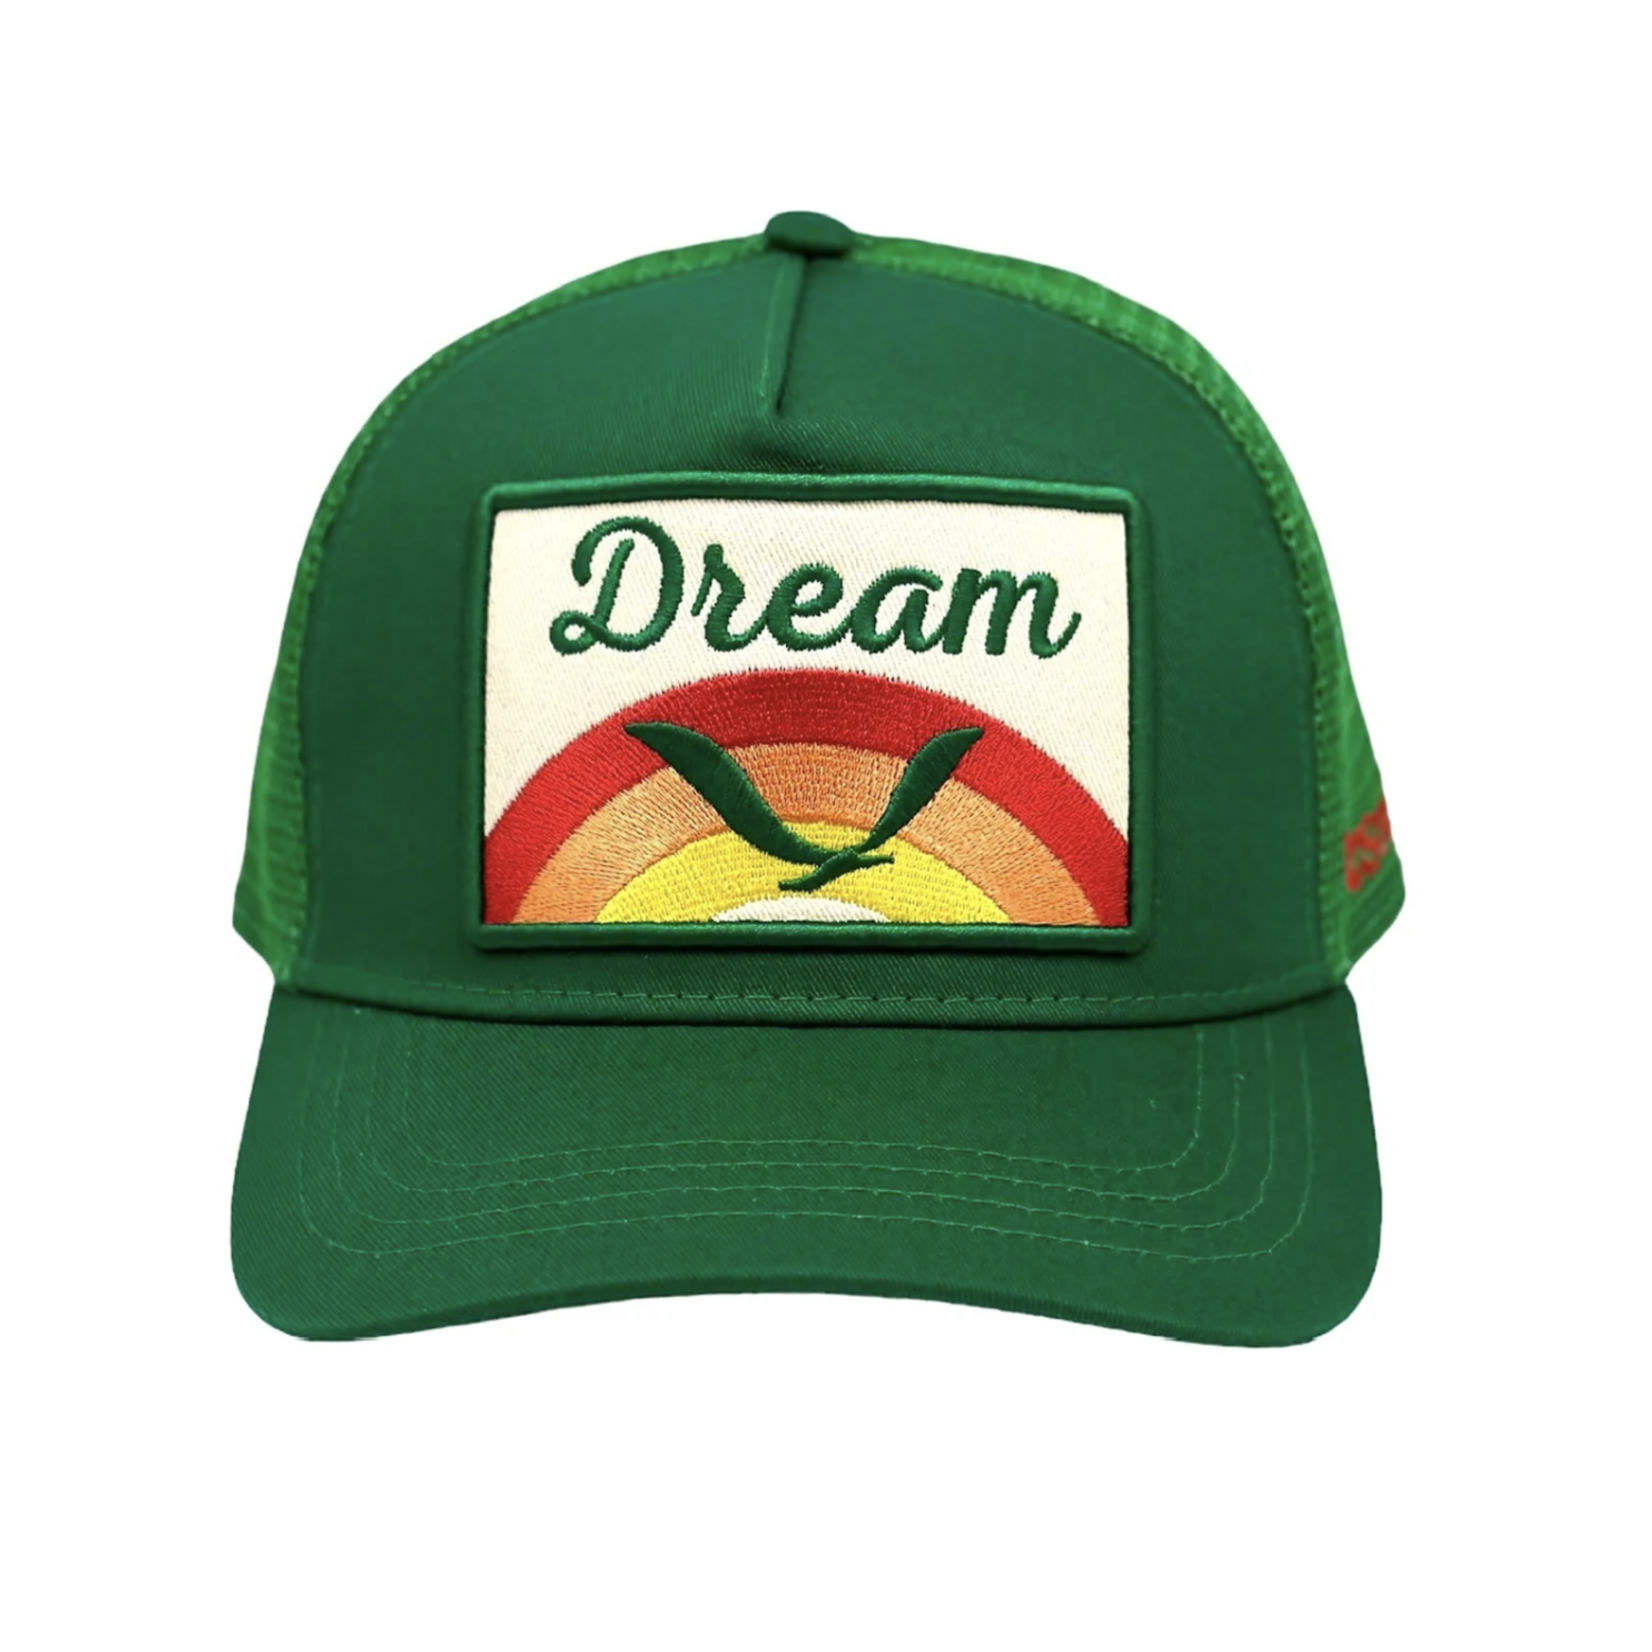 Dream Trucker Hat